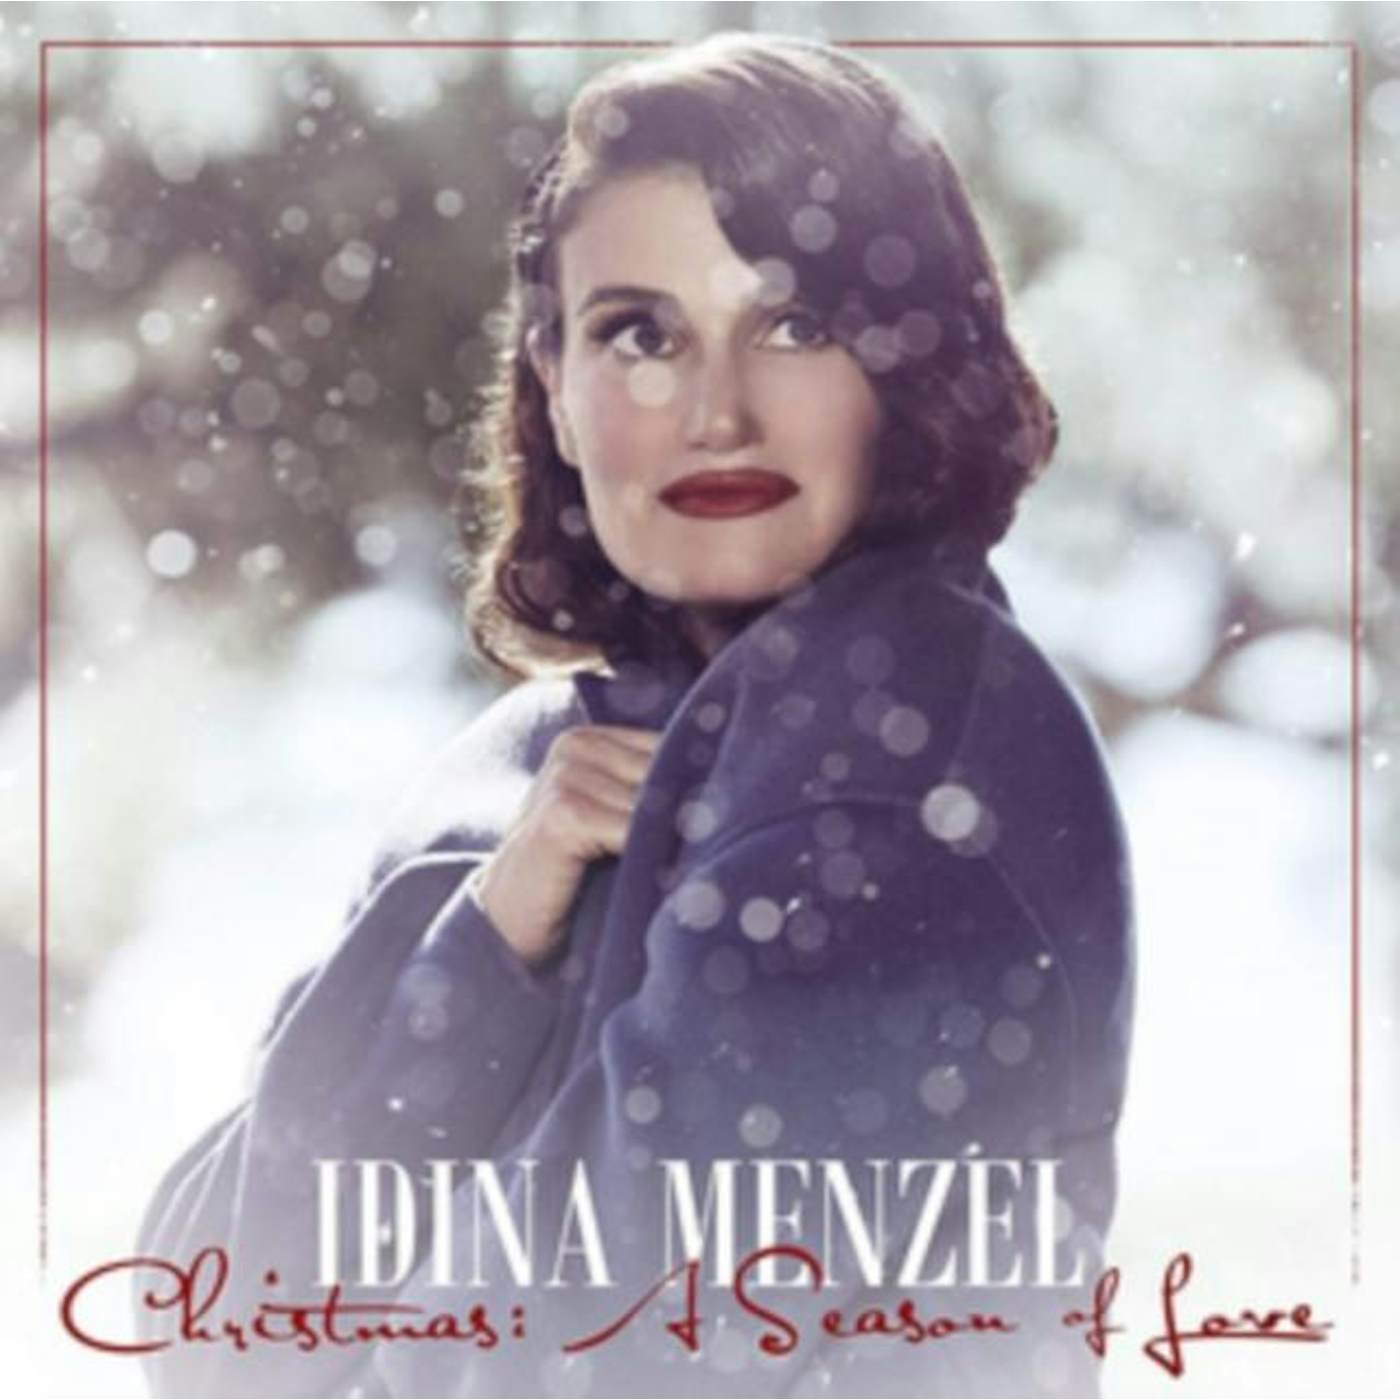 Idina Menzel LP Vinyl Record - Christmas - A Season Of Love